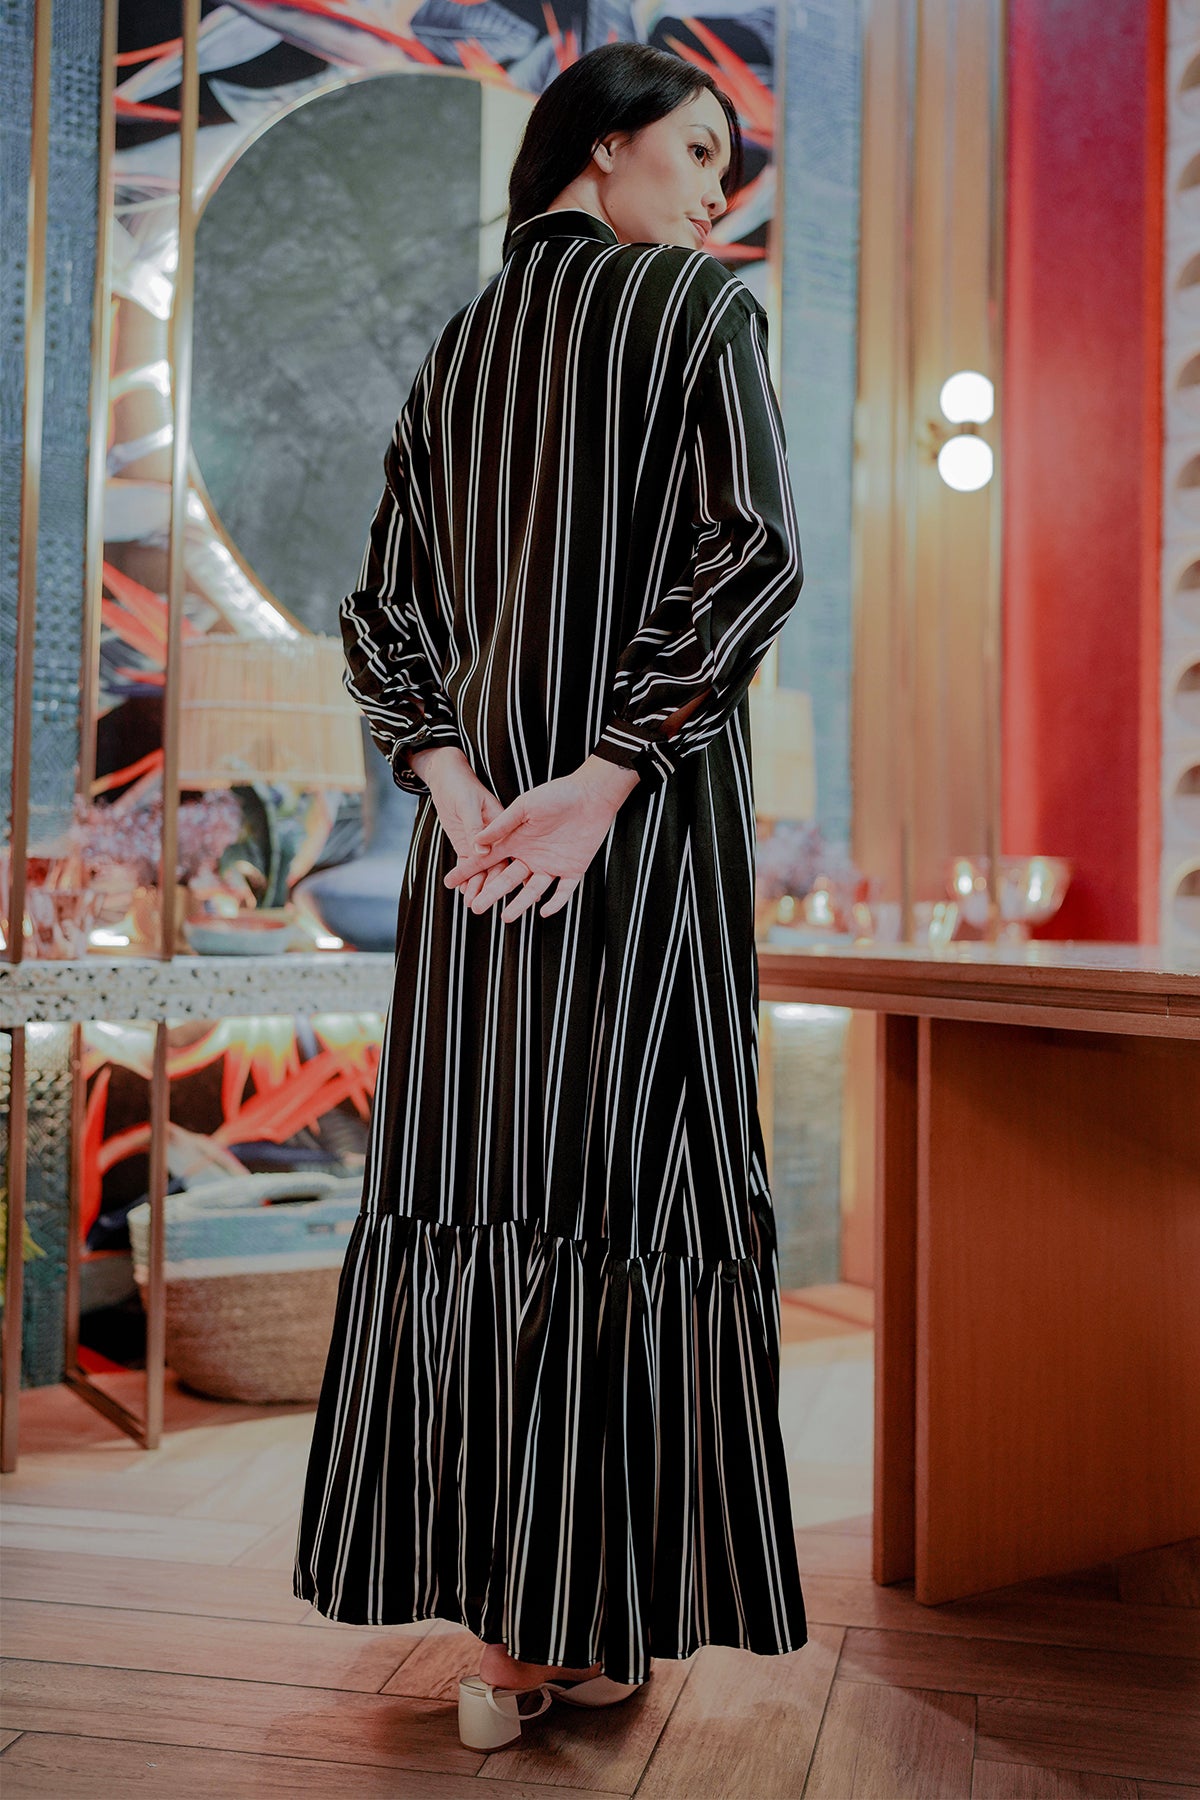 Alysa Stripe Shirt Dress - Black